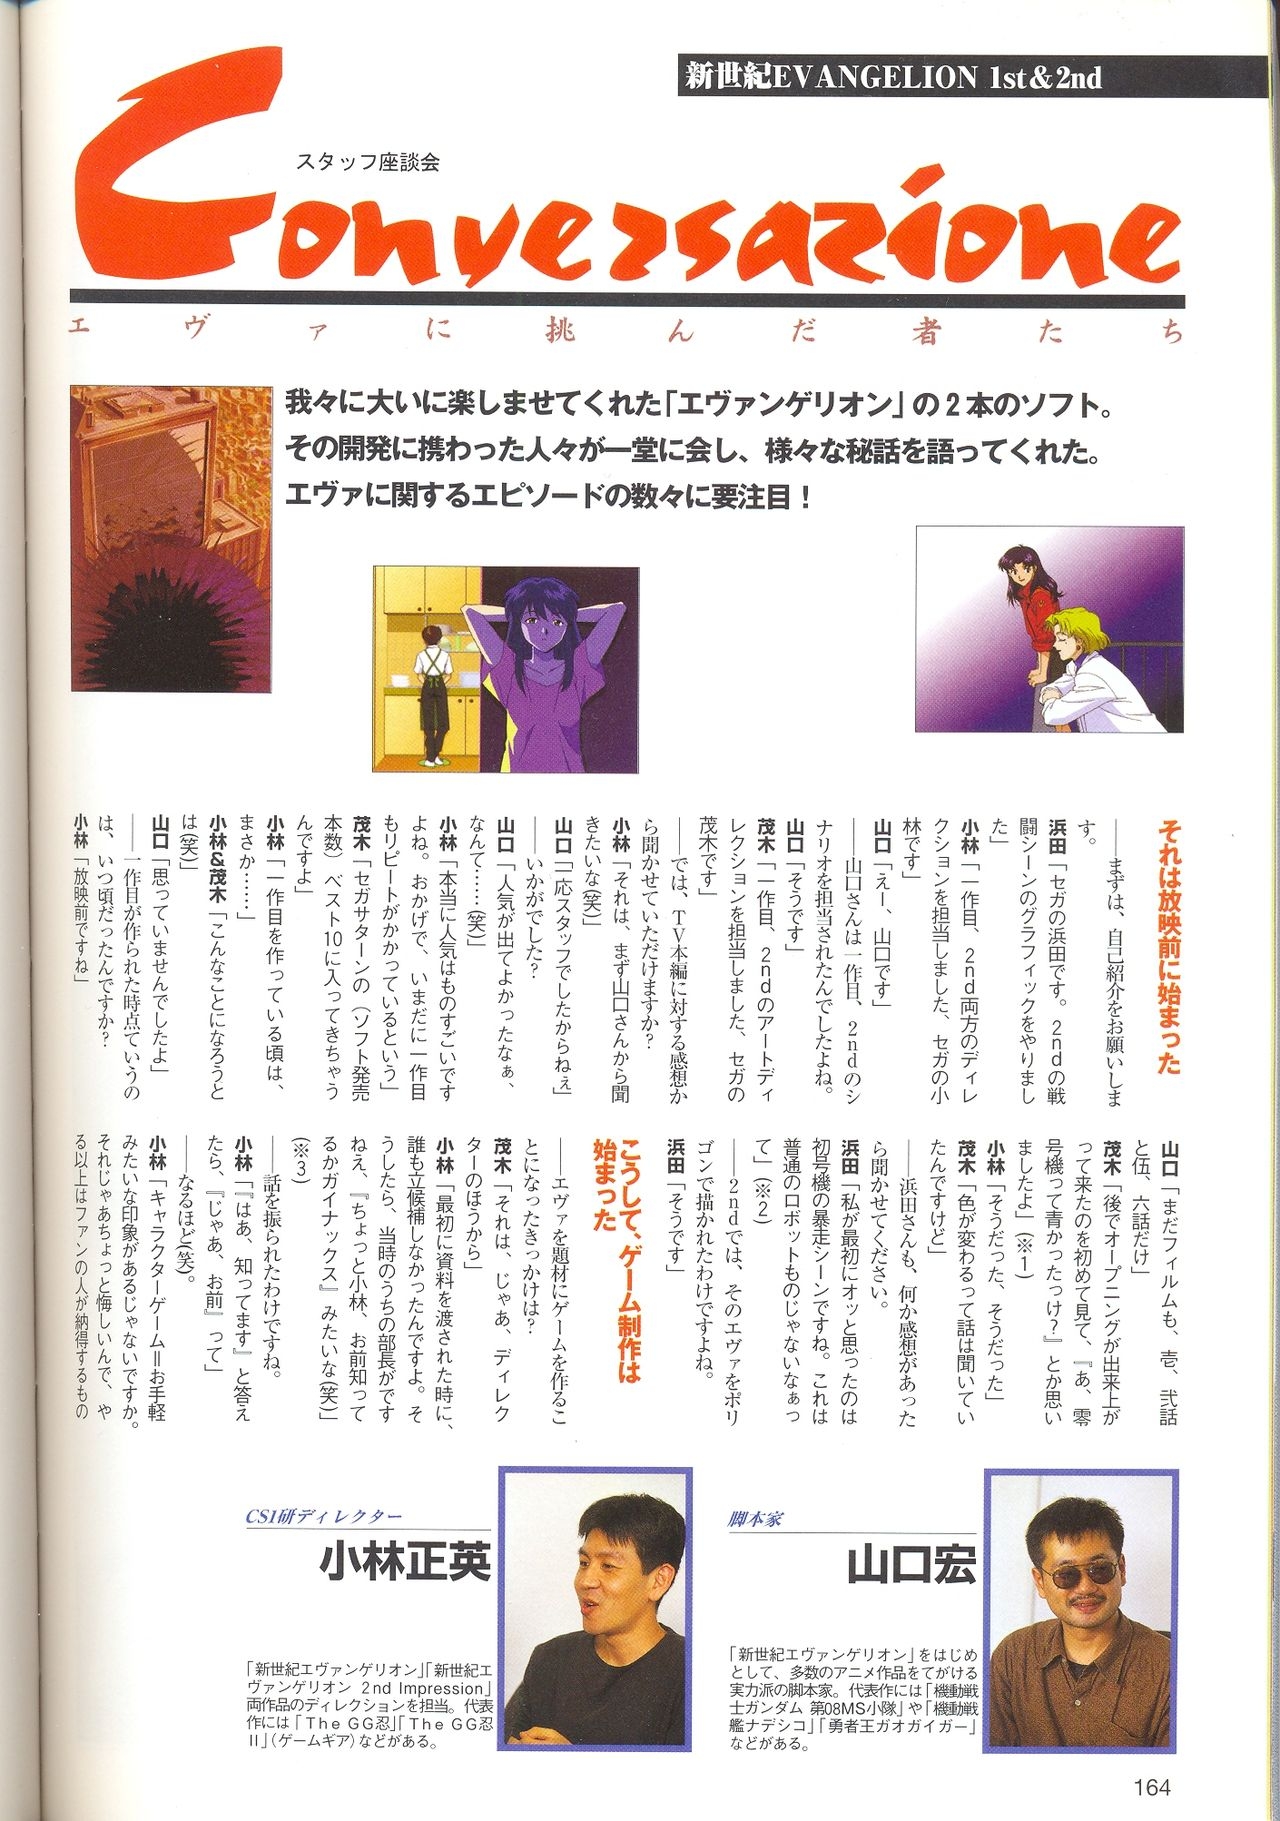 Neon Genesis Evangelion - 2nd Impression Sega Saturn Perfect Guide 163